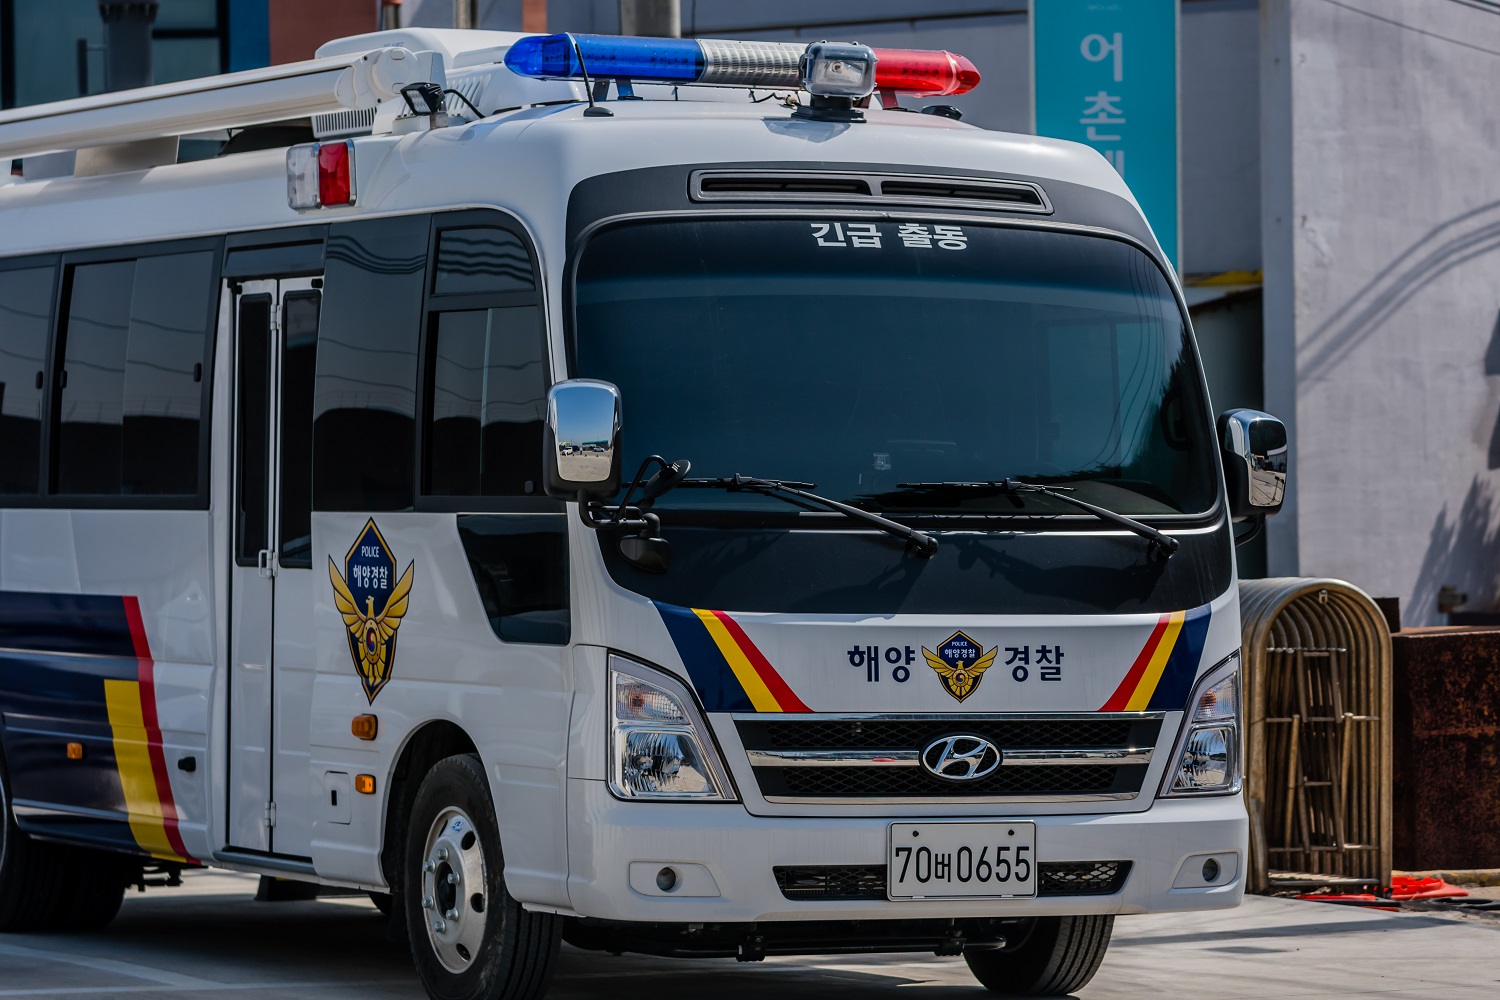 A South Korean police bus on a city street.